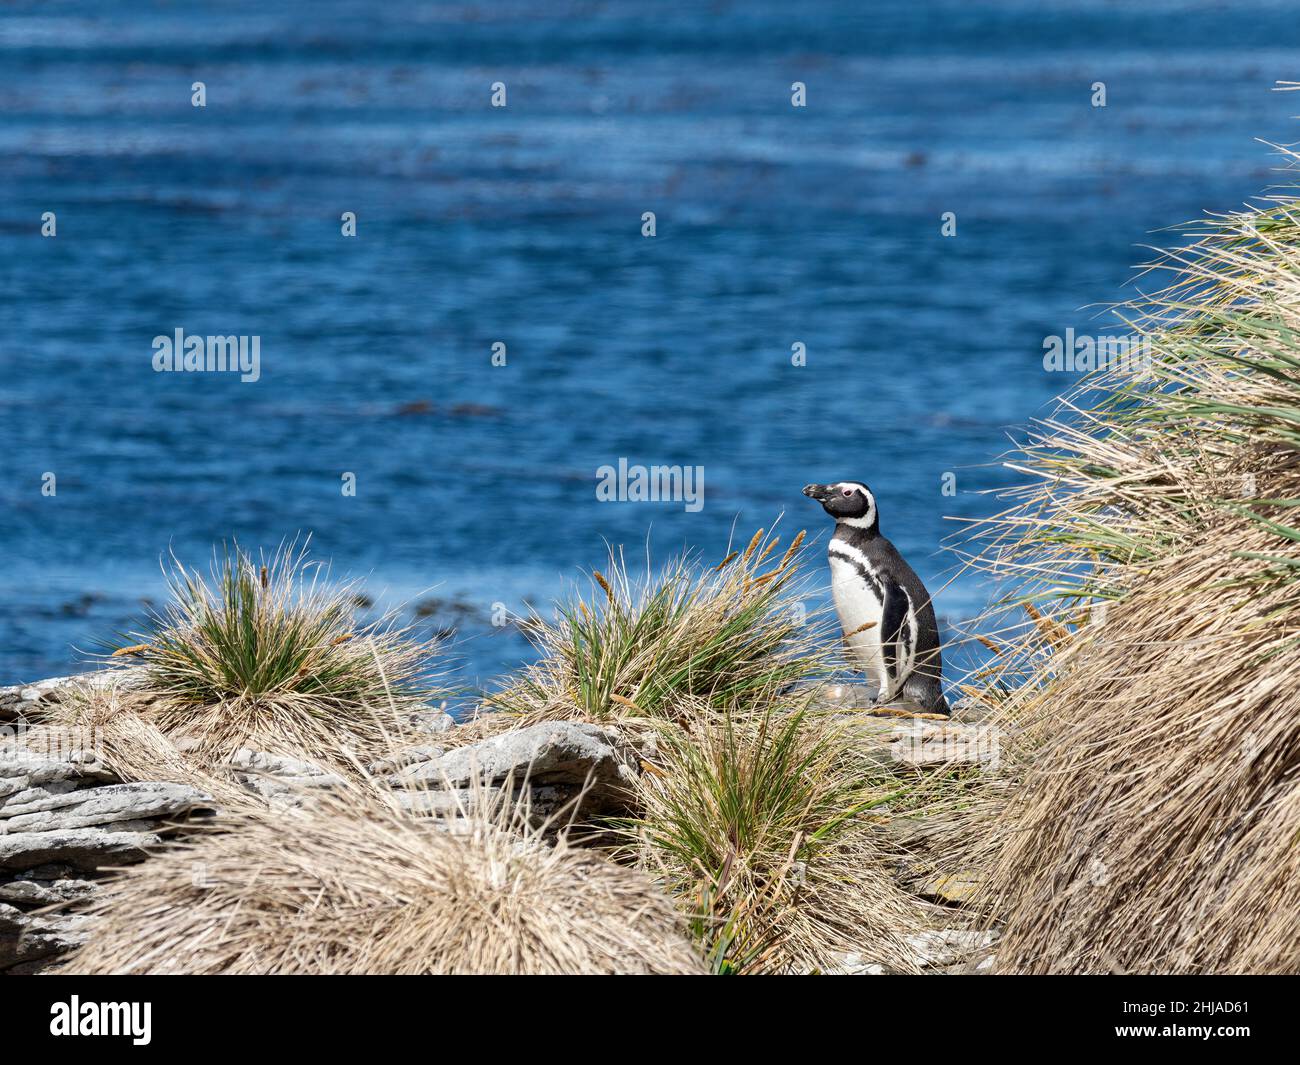 Adult Magellanic penguin, Spheniscus magellanicus, returning from the sea on Carcass Island, Falkland Islands. Stock Photo